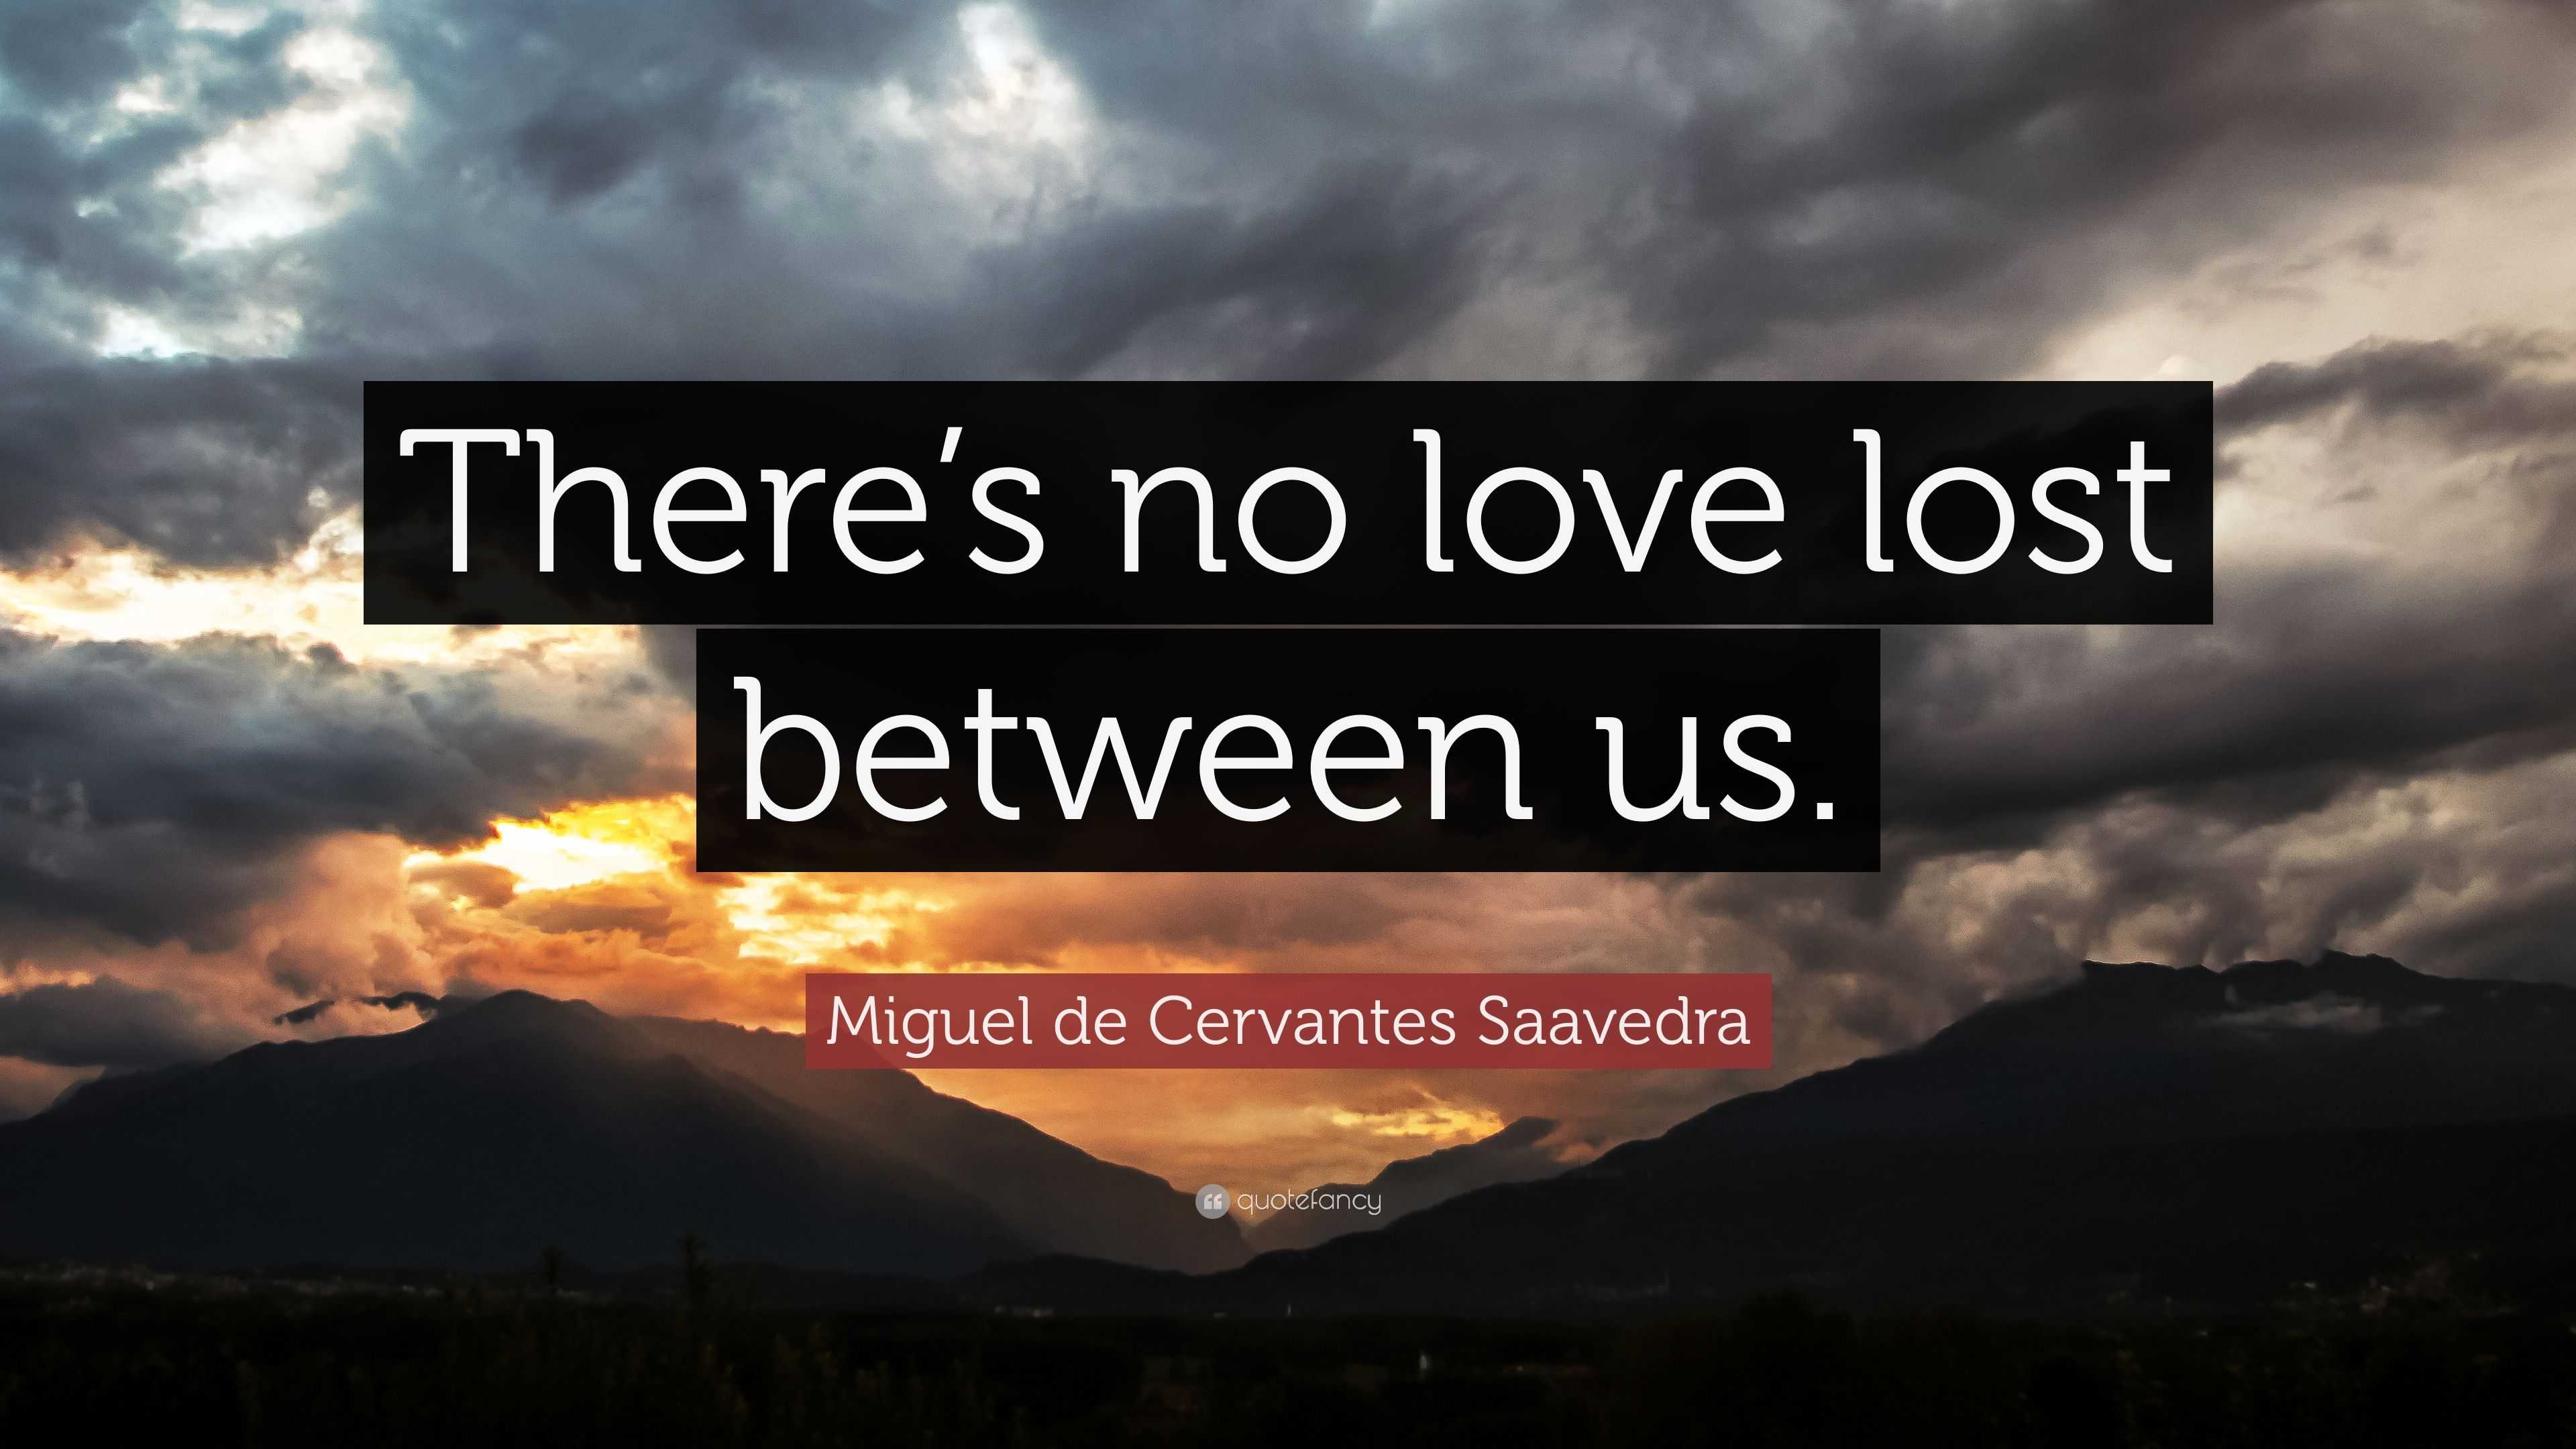 Miguel de Cervantes Saavedra Quote “There s no love lost between us ”